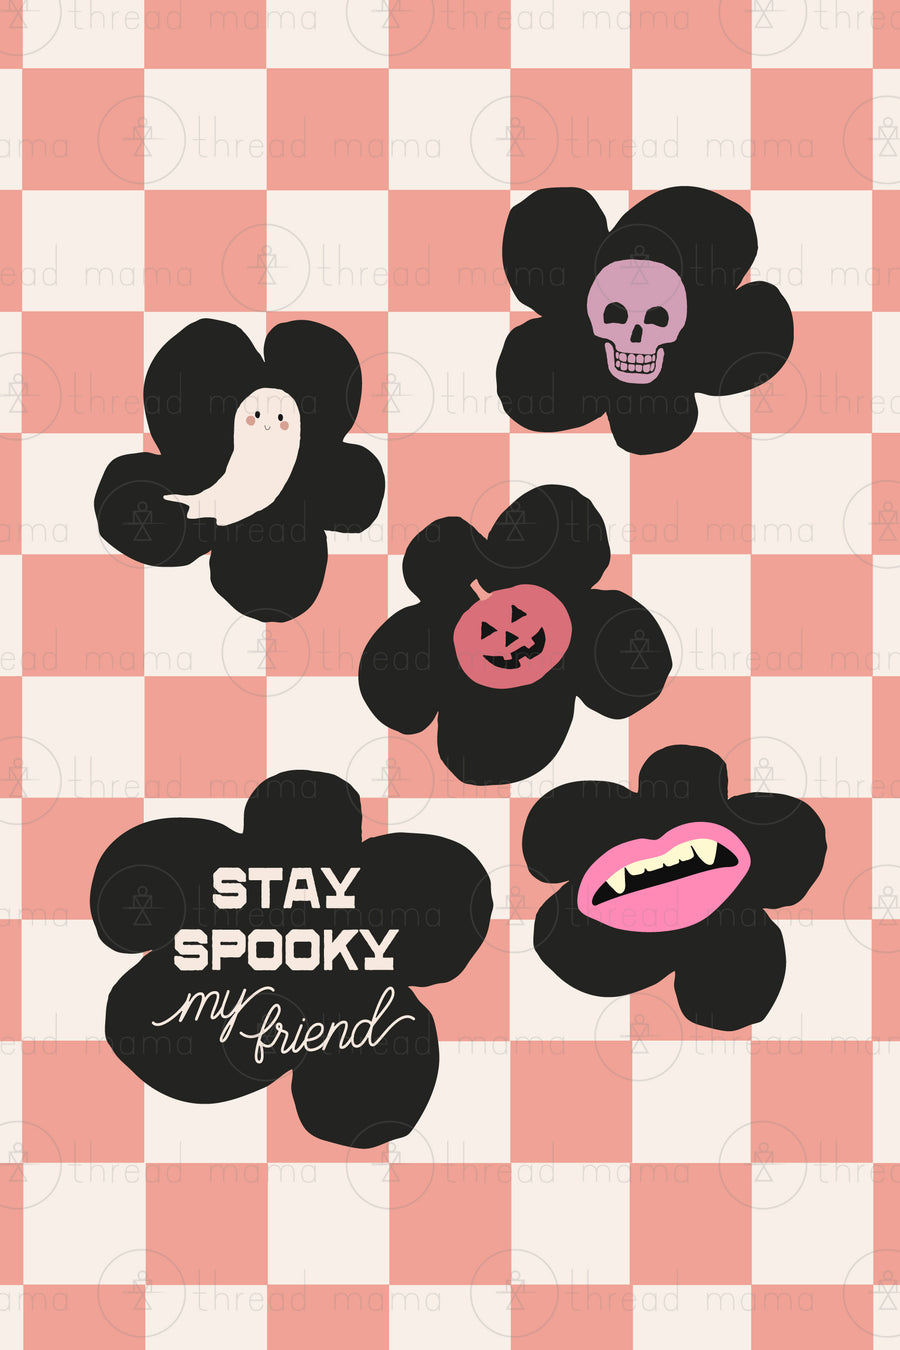 Stay Spooky My Friend - Set